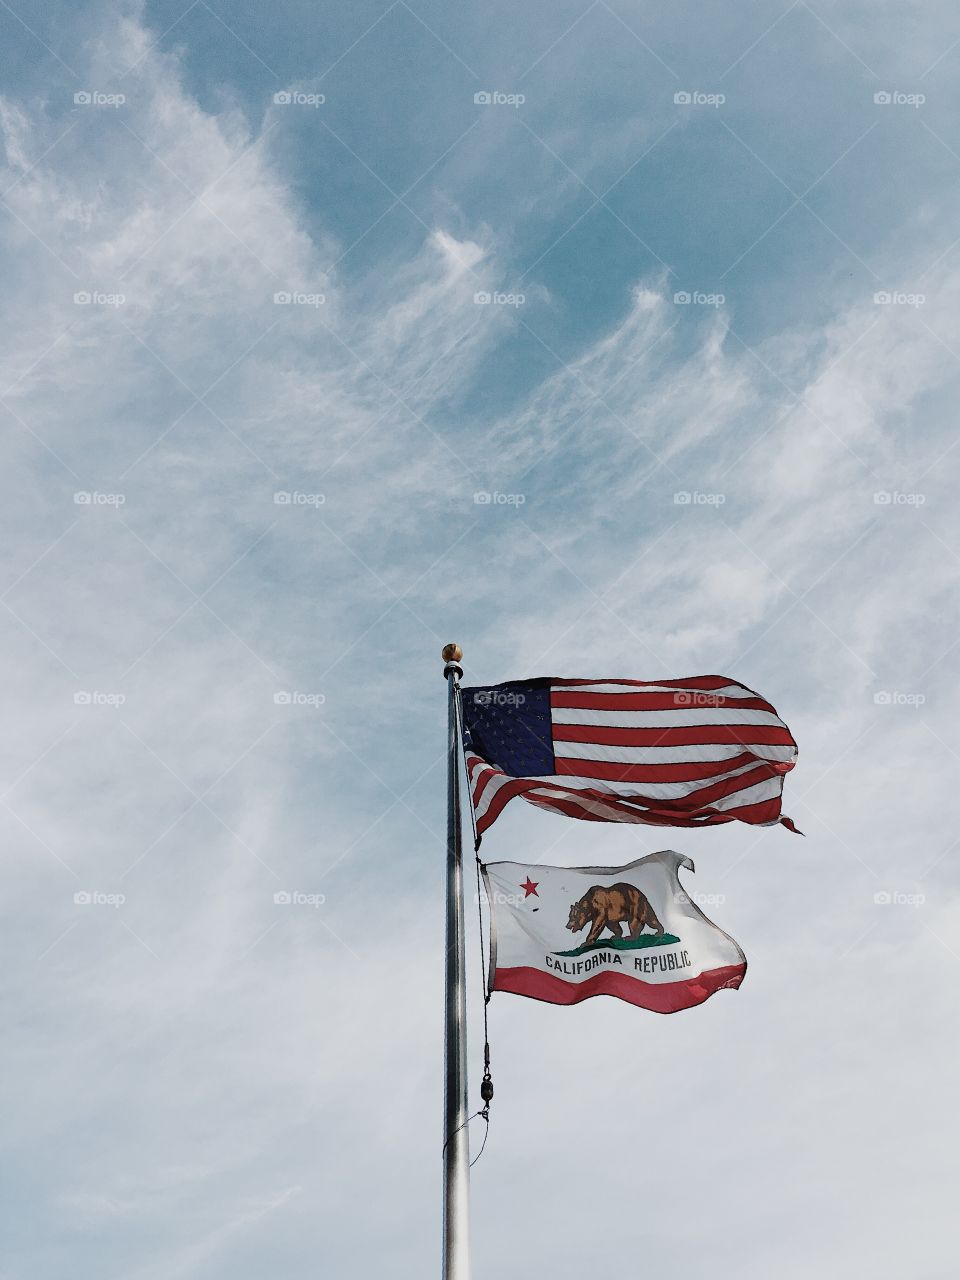 American flag + California flag. 